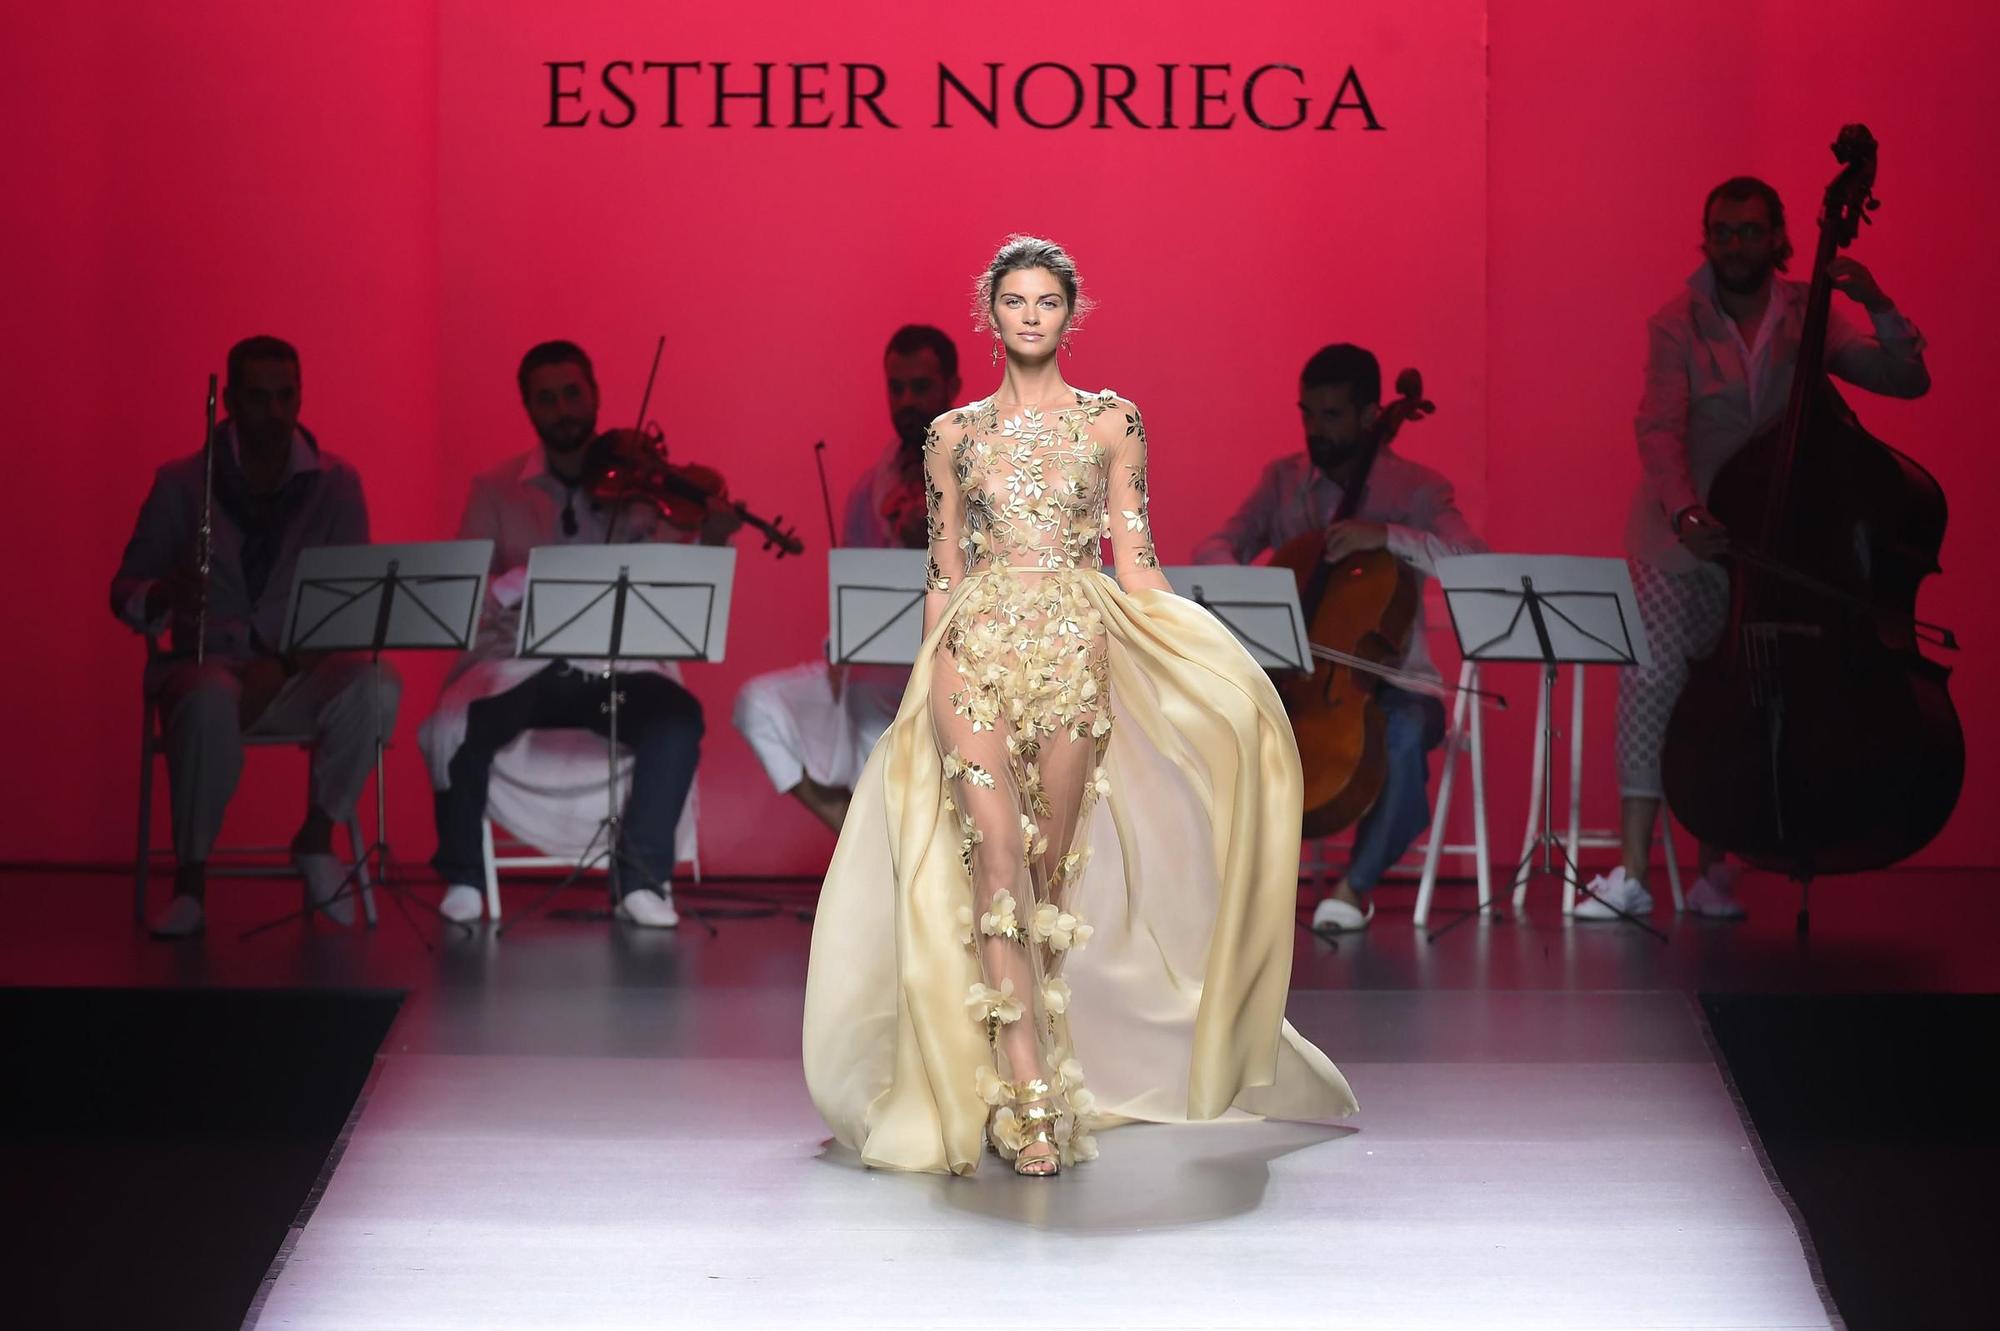 Esther Noriega primavera/ verano 2016, vestido dorado